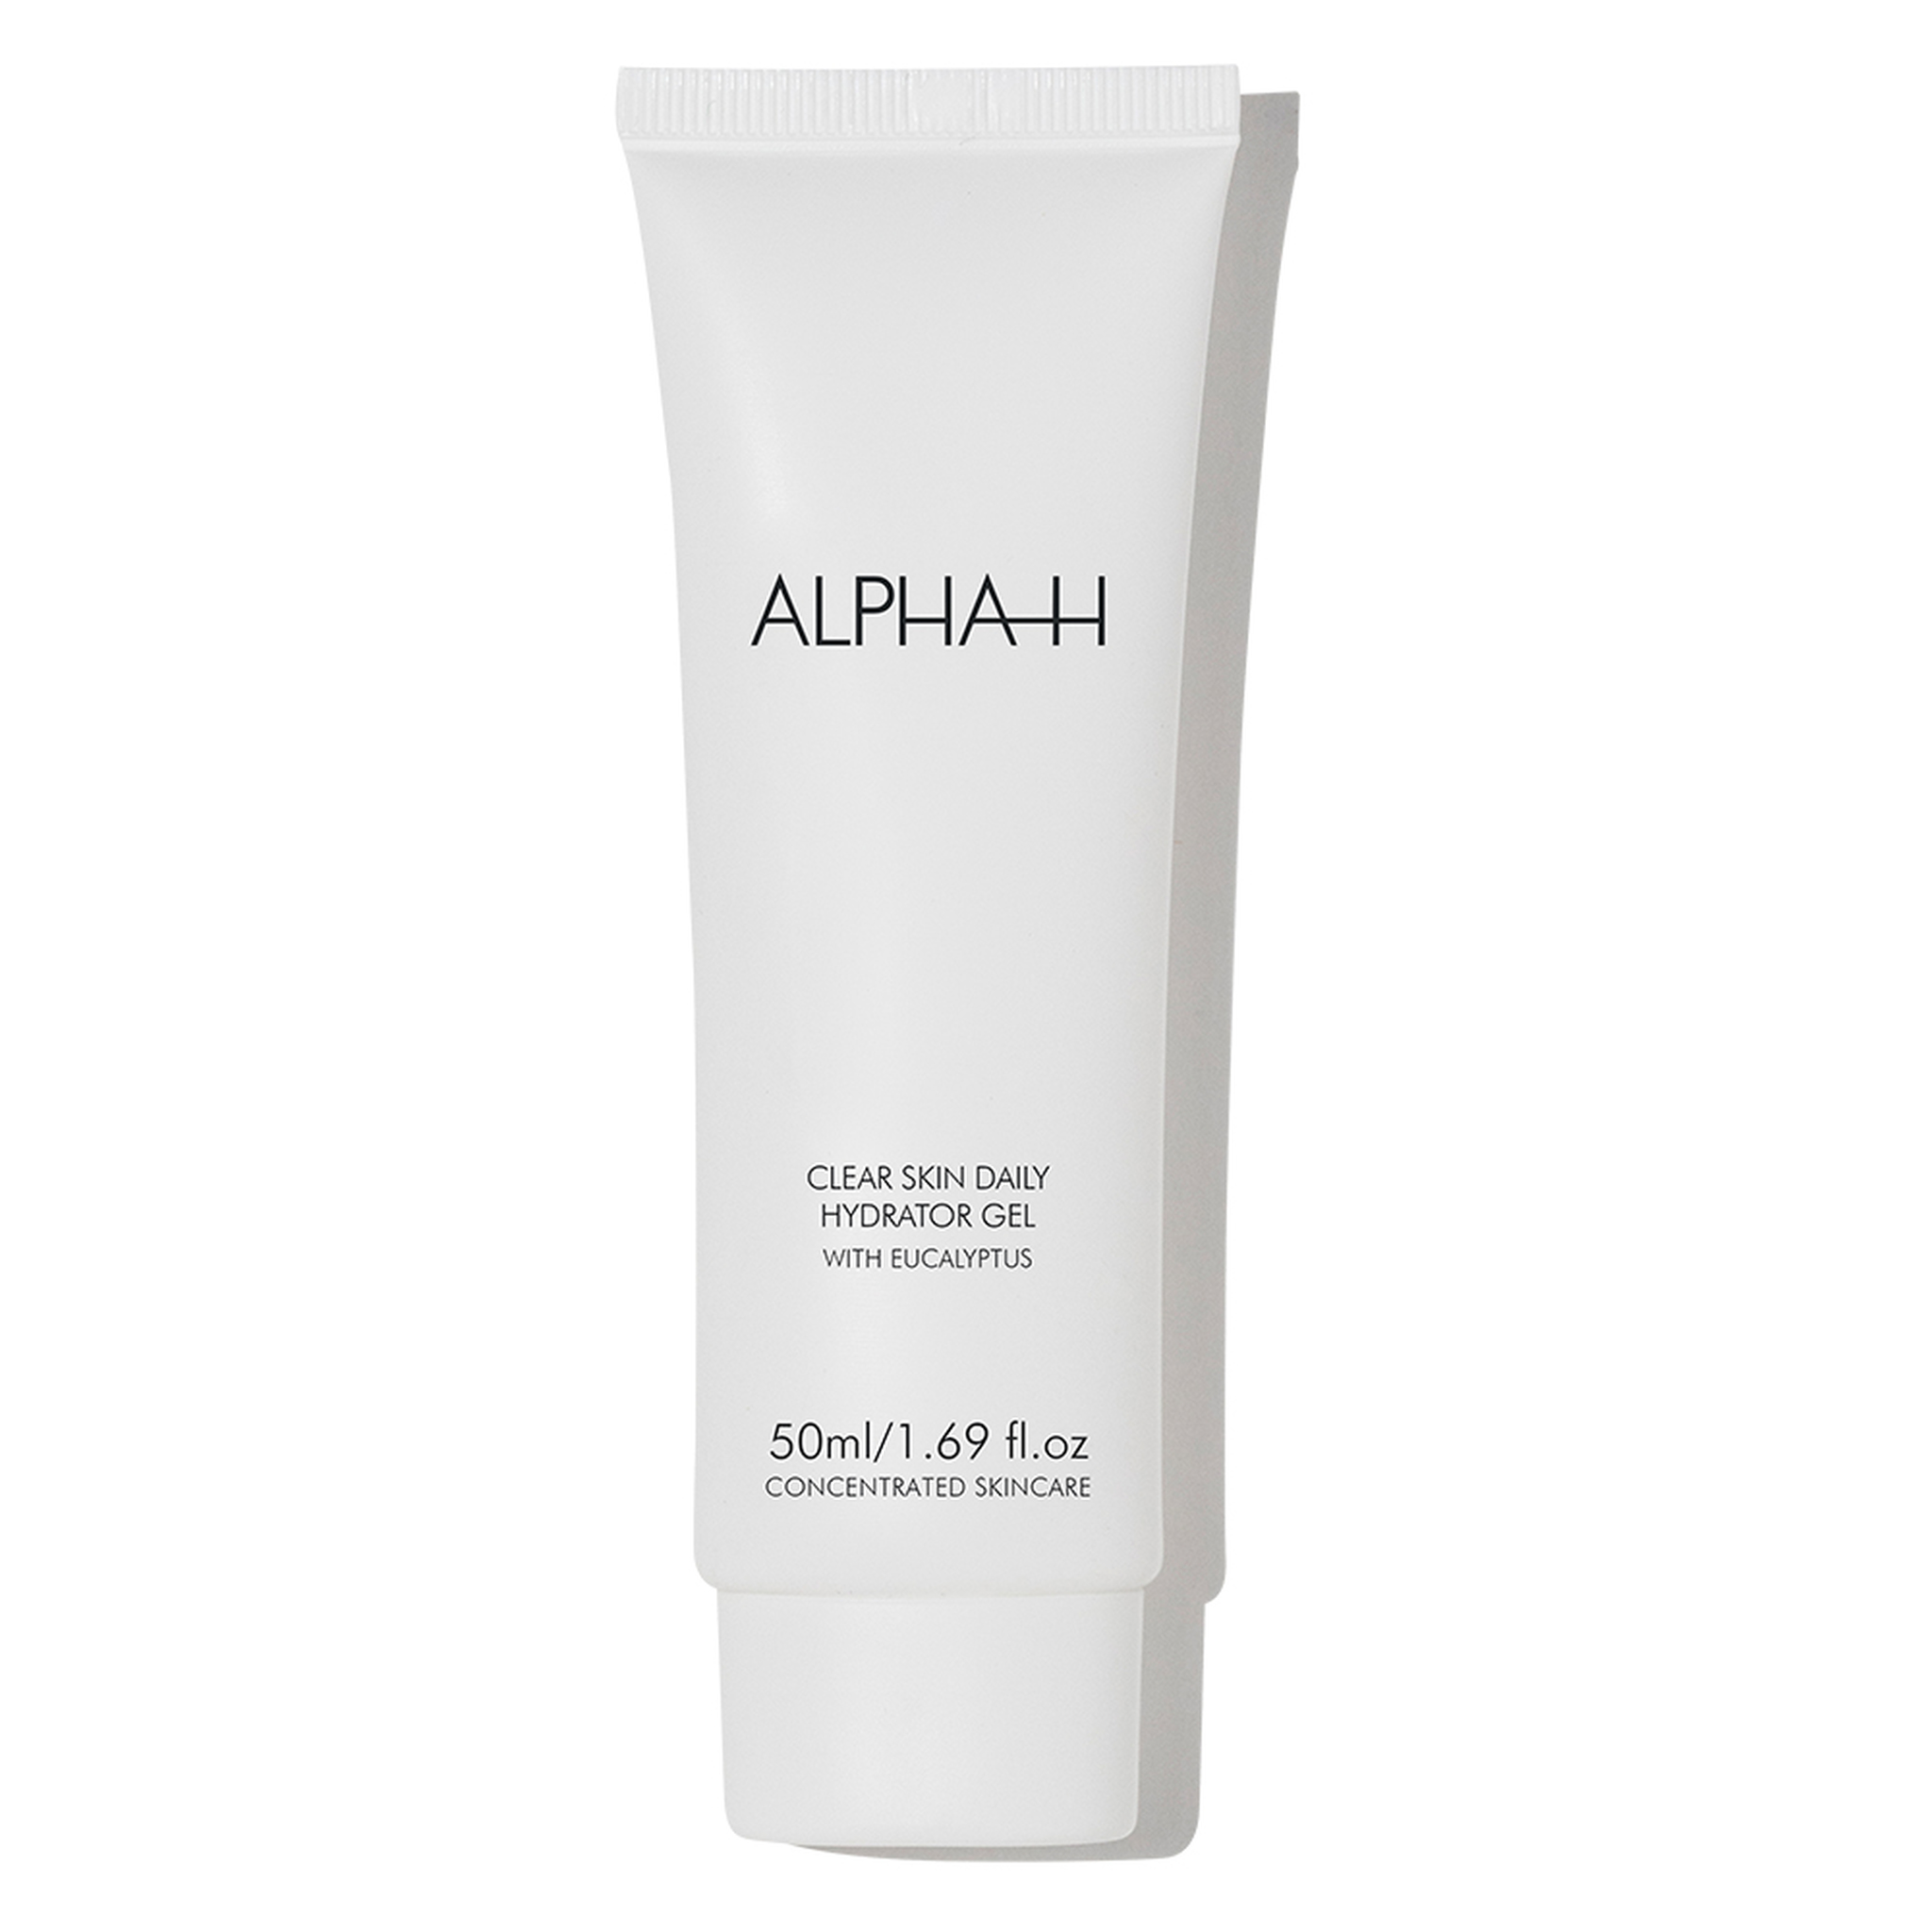 Dewi Review: Eksfoliasi Instan Alpha H Micro Cleanse Super Scrub dan Clear Skin Daily Hydrator Gel